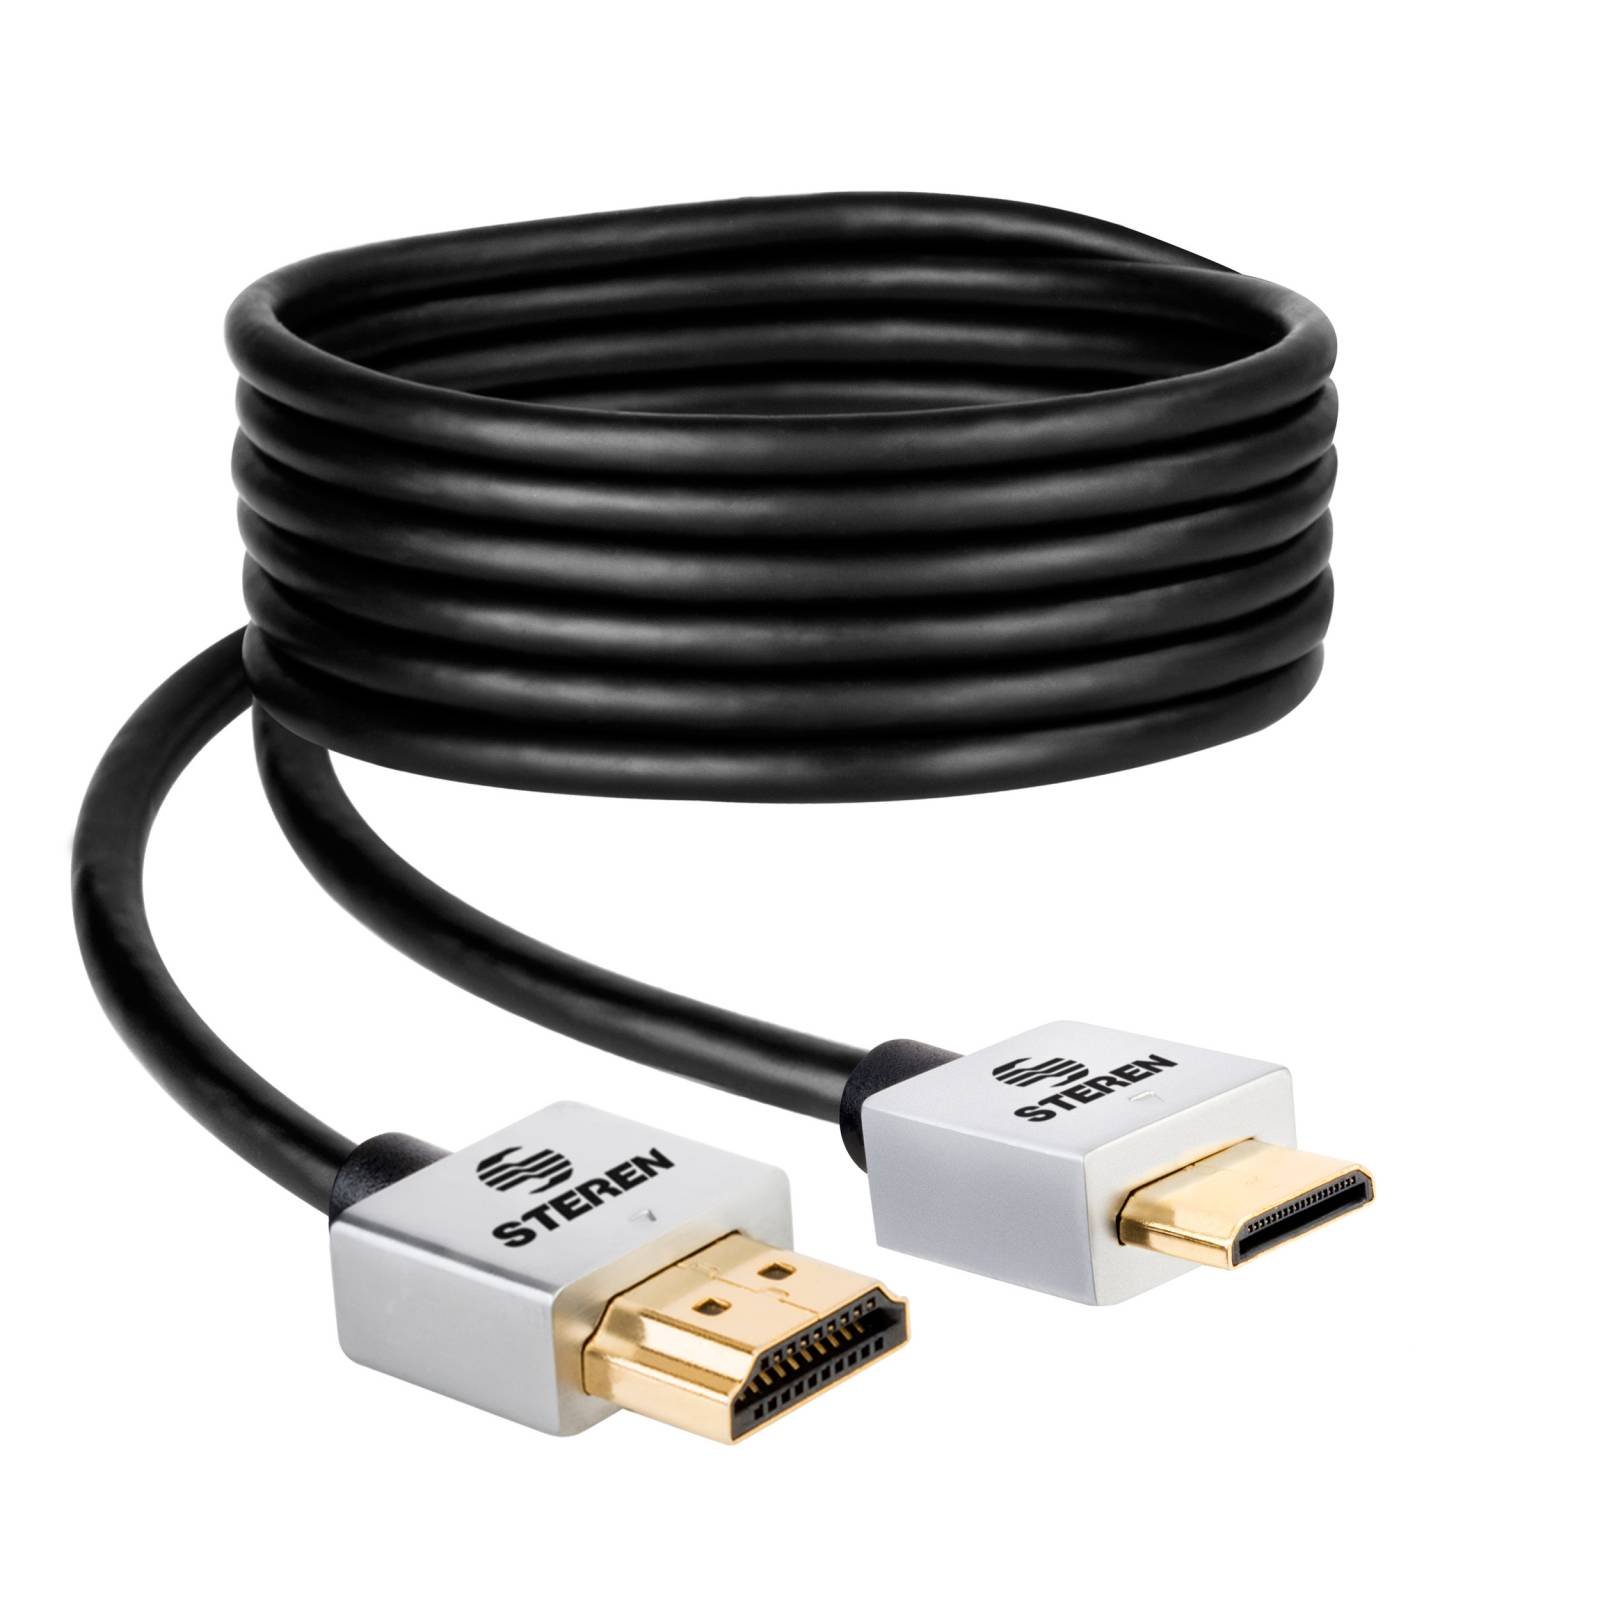 Cable Elite 4K mini HDMI  a HDMI  ultra delgado, de 1,8m